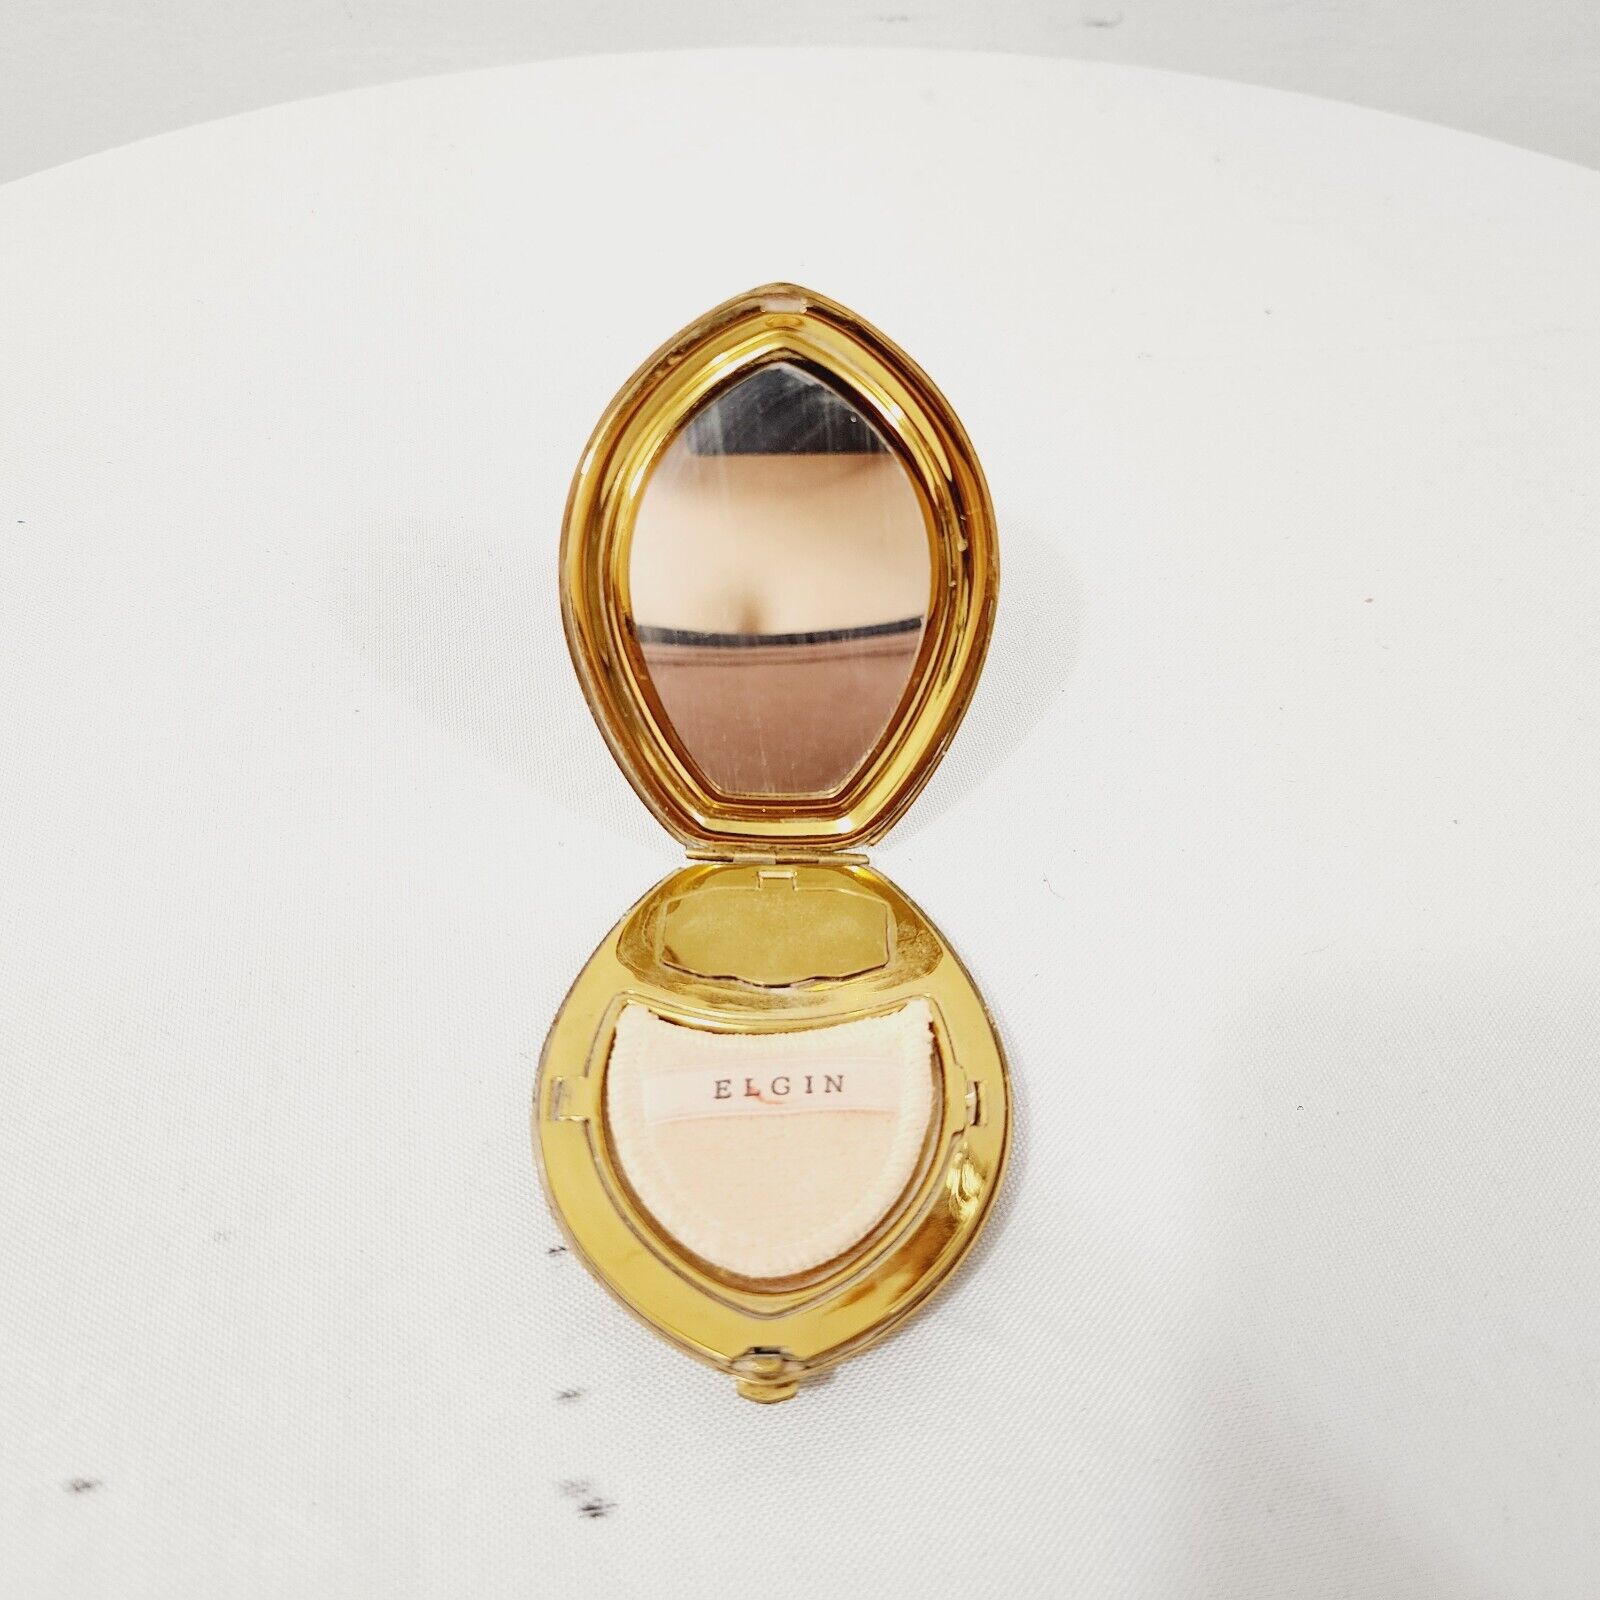 Vintage Art Deco Elgin America Compact Powder Mirror Makeup Vanity Brass Gold